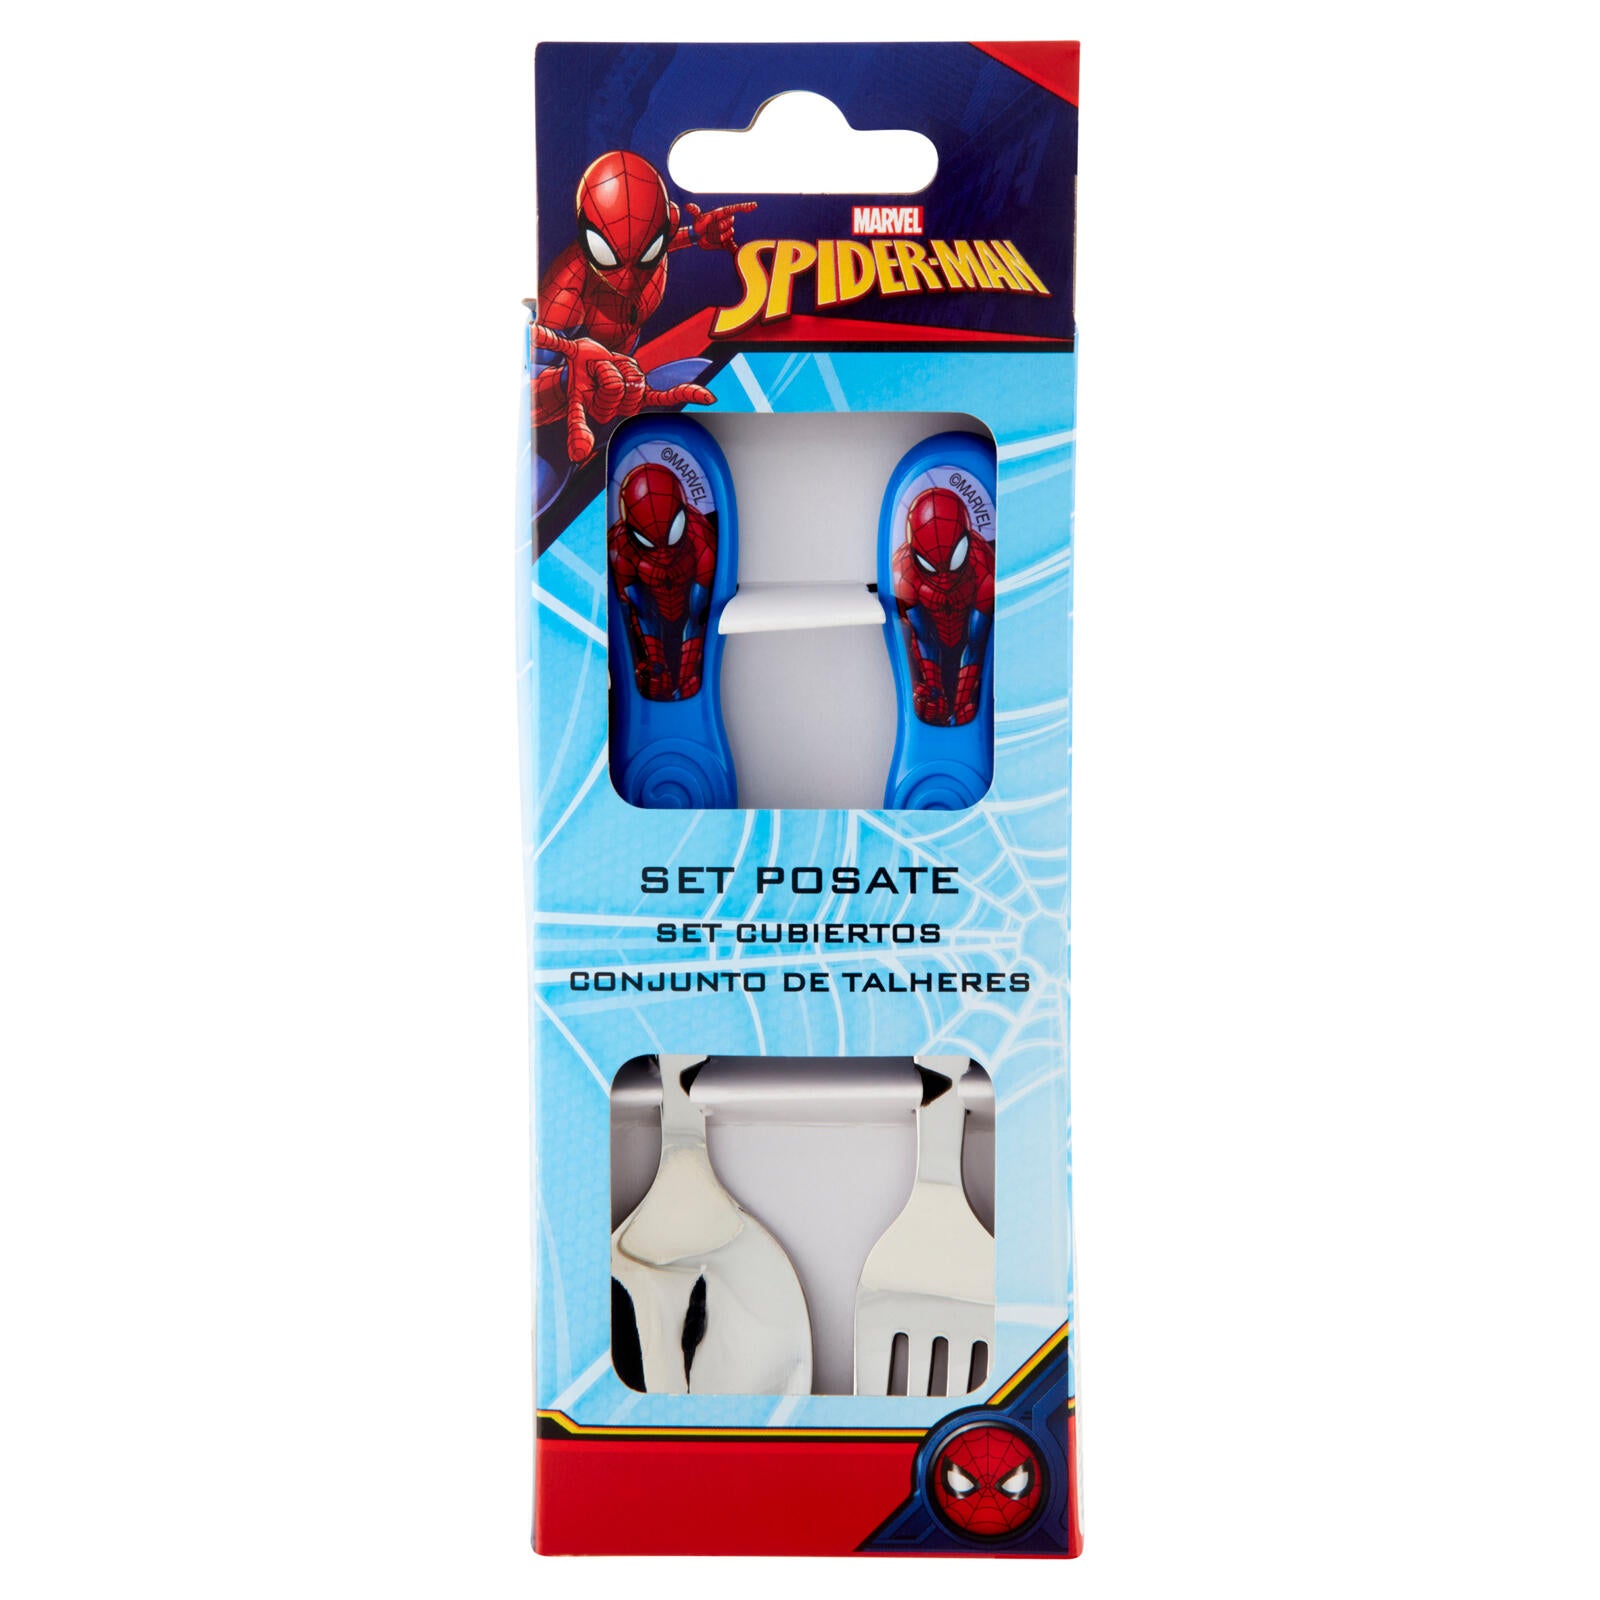 Set Posate Marvel Spider-Man